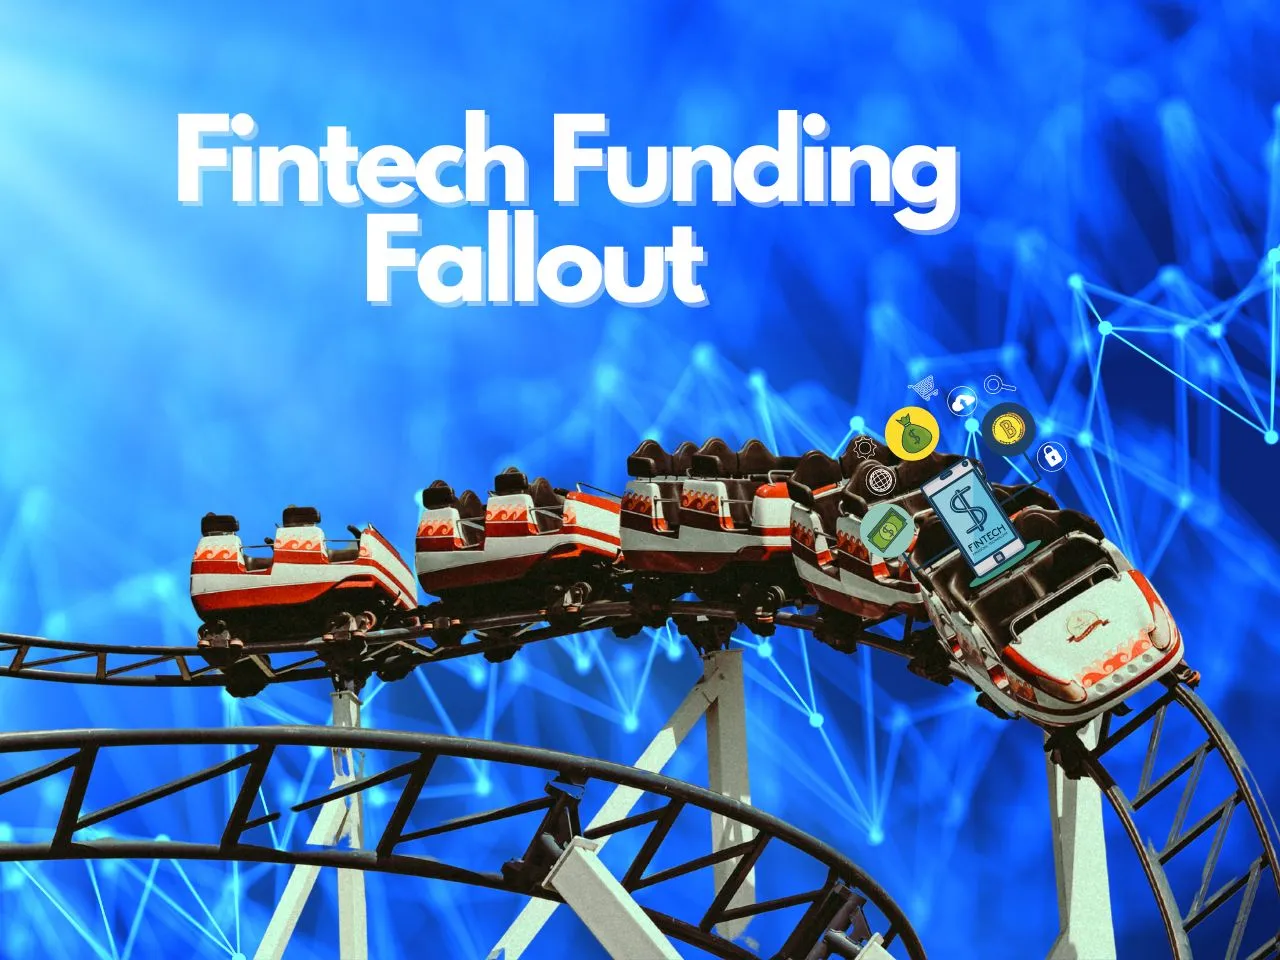 Fintech funding fallout